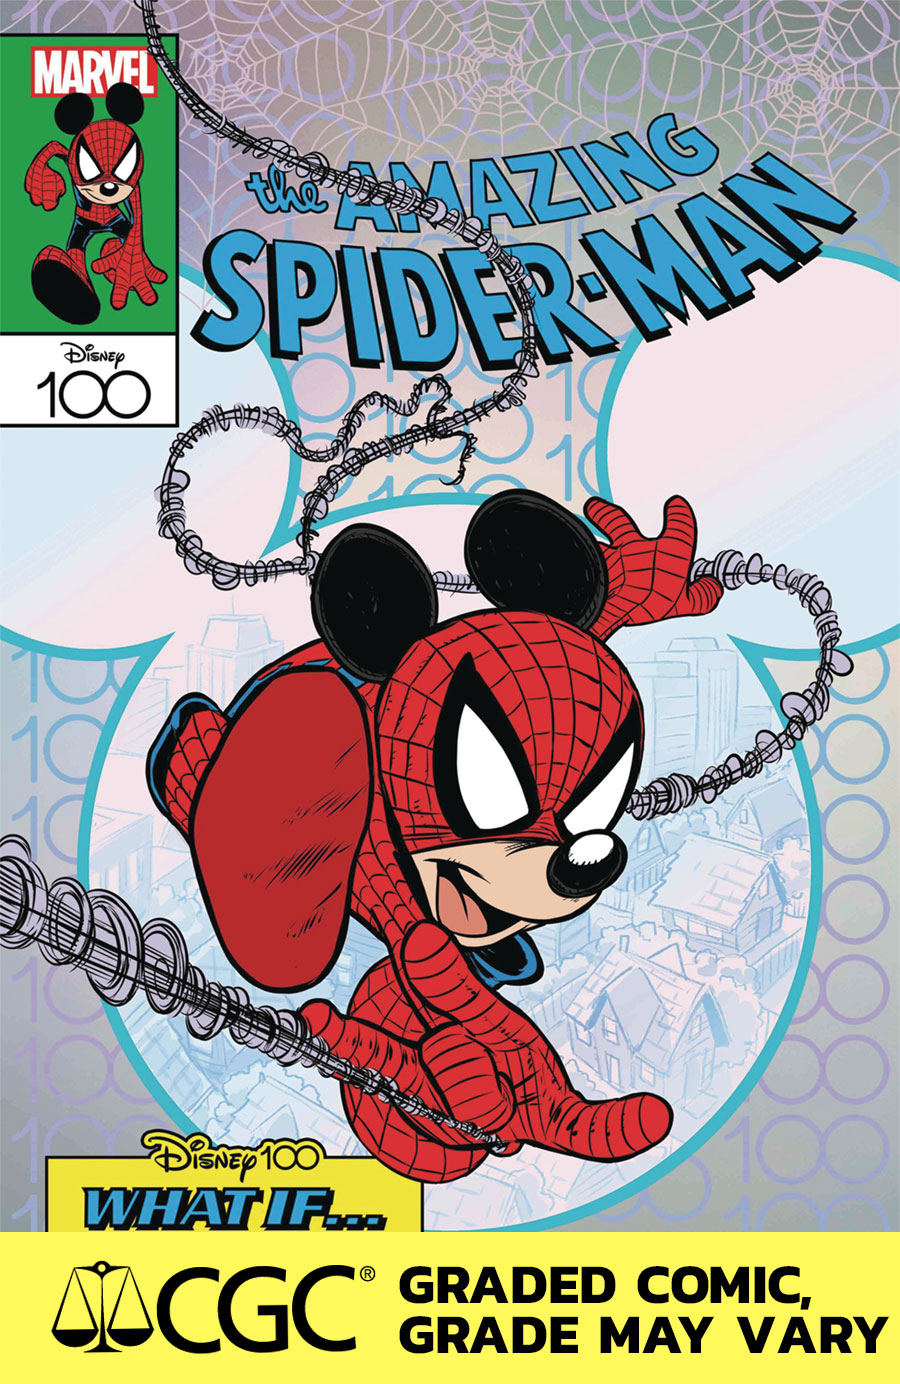 Amazing Spider-Man Vol 6 #35 Cover G DF Claudio Sciarrone Disney100 Spider-Man Homage Variant Cover CGC Graded 9.6 Or Higher